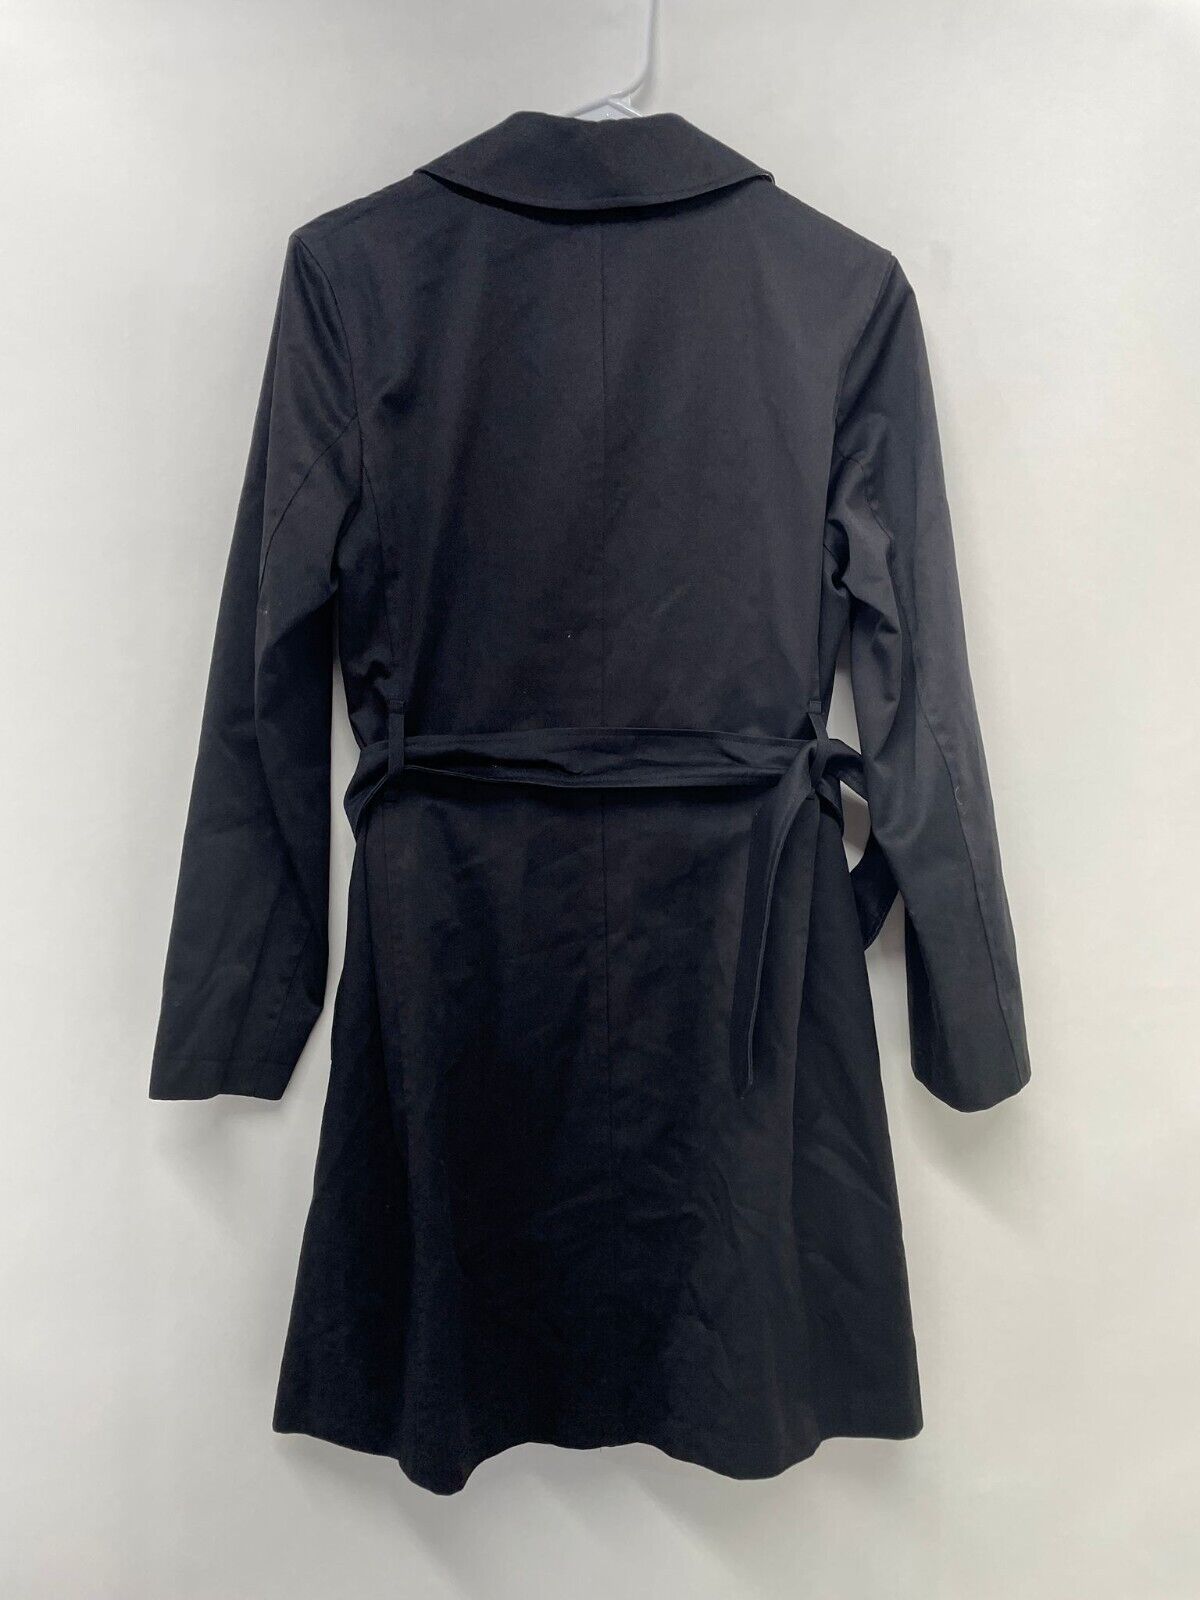 Burberry London Women 2R Black Natasha Belted Trench Coat Long Jacket Nova Check